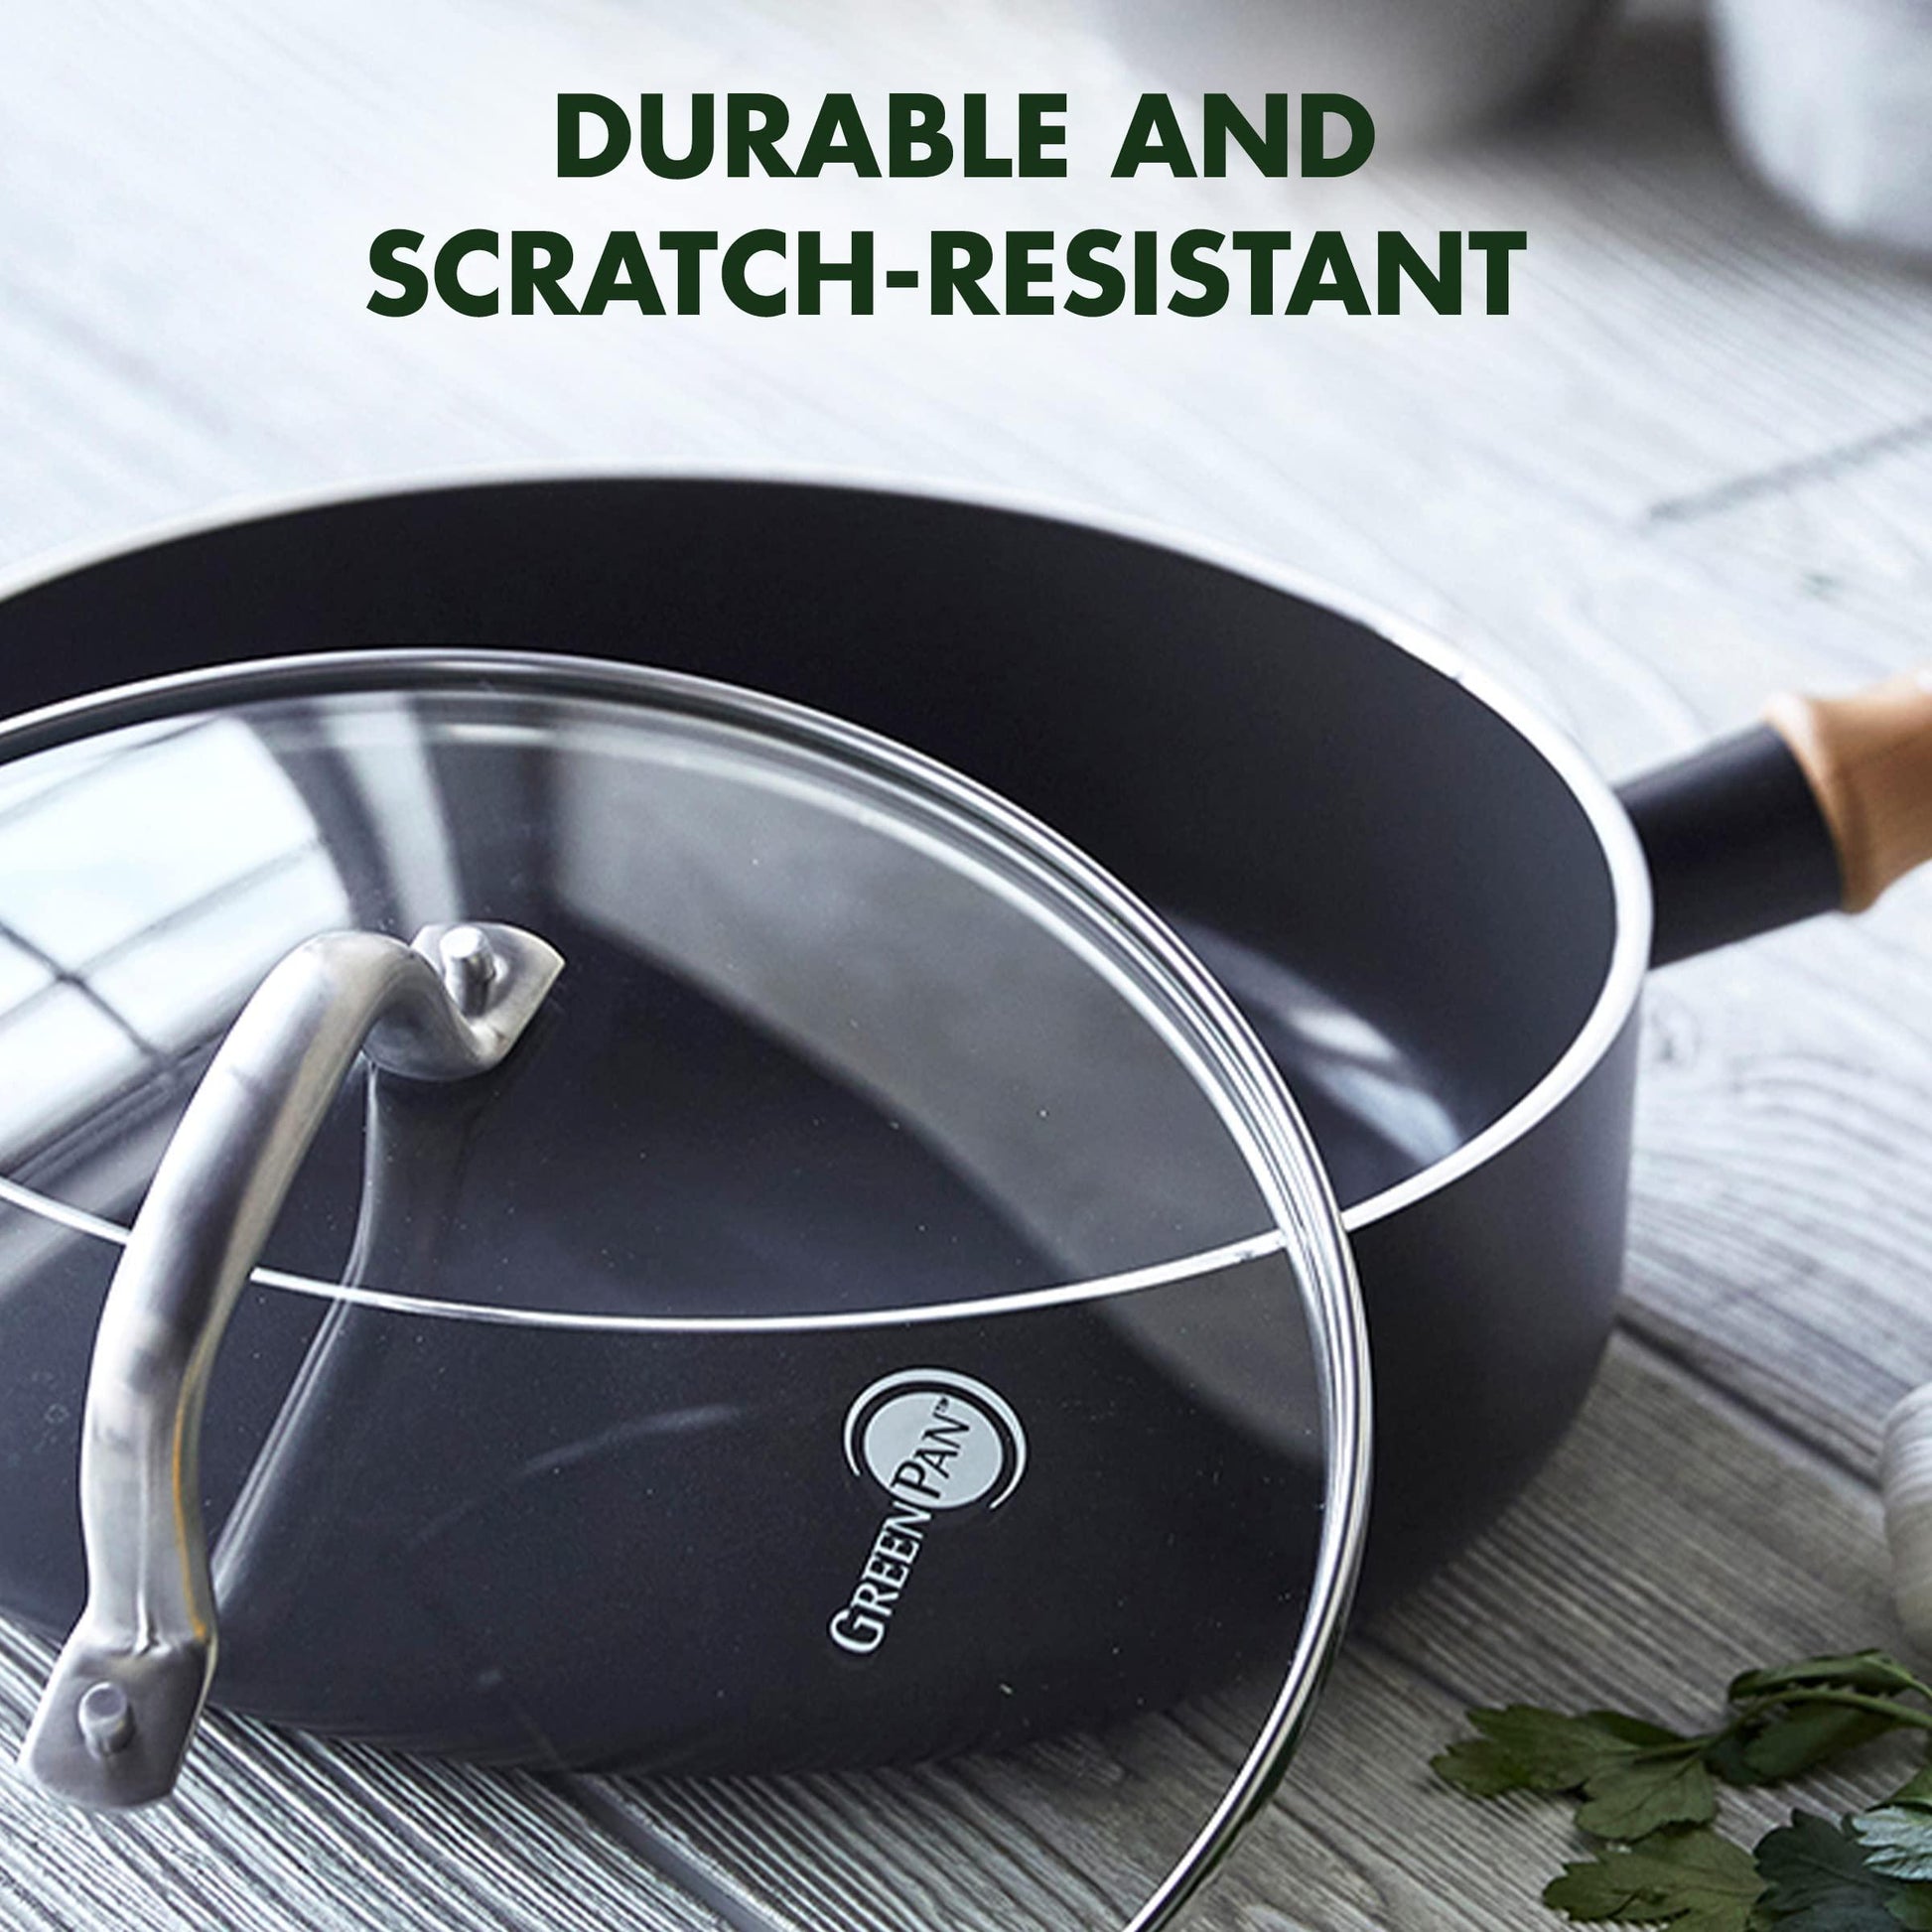 GreenPan Hudson Healthy Ceramic Nonstick, 3QT Saute pan Jumbo Cooker with Lid, Vintage Wood Insipred Handle, PFAS-Free, Dishwasher Safe, Black - CookCave